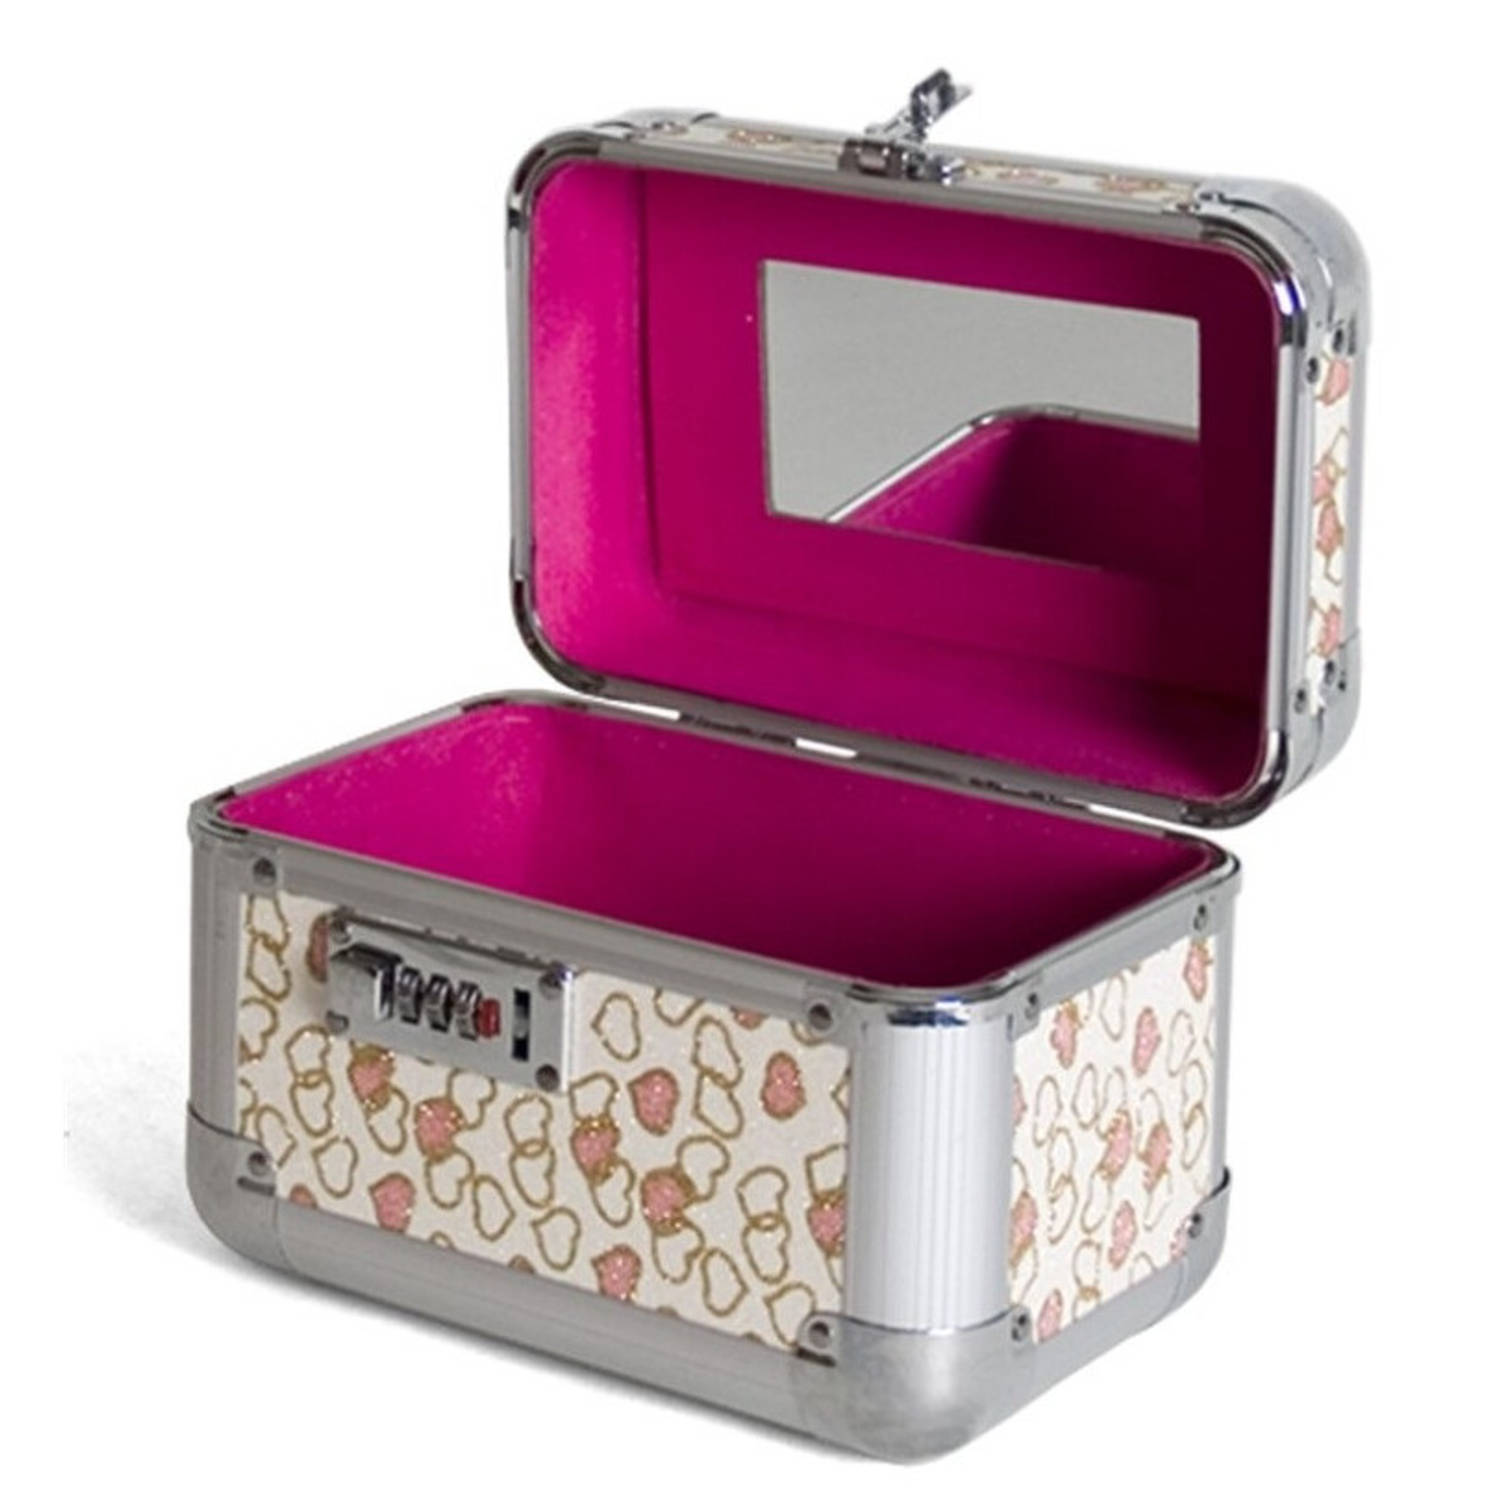 Beautycase Met Roze Hartjes En Cijferslot 21 X 14 X 21 Cm Make Up Koffers Sieradenkist-juwelenkist